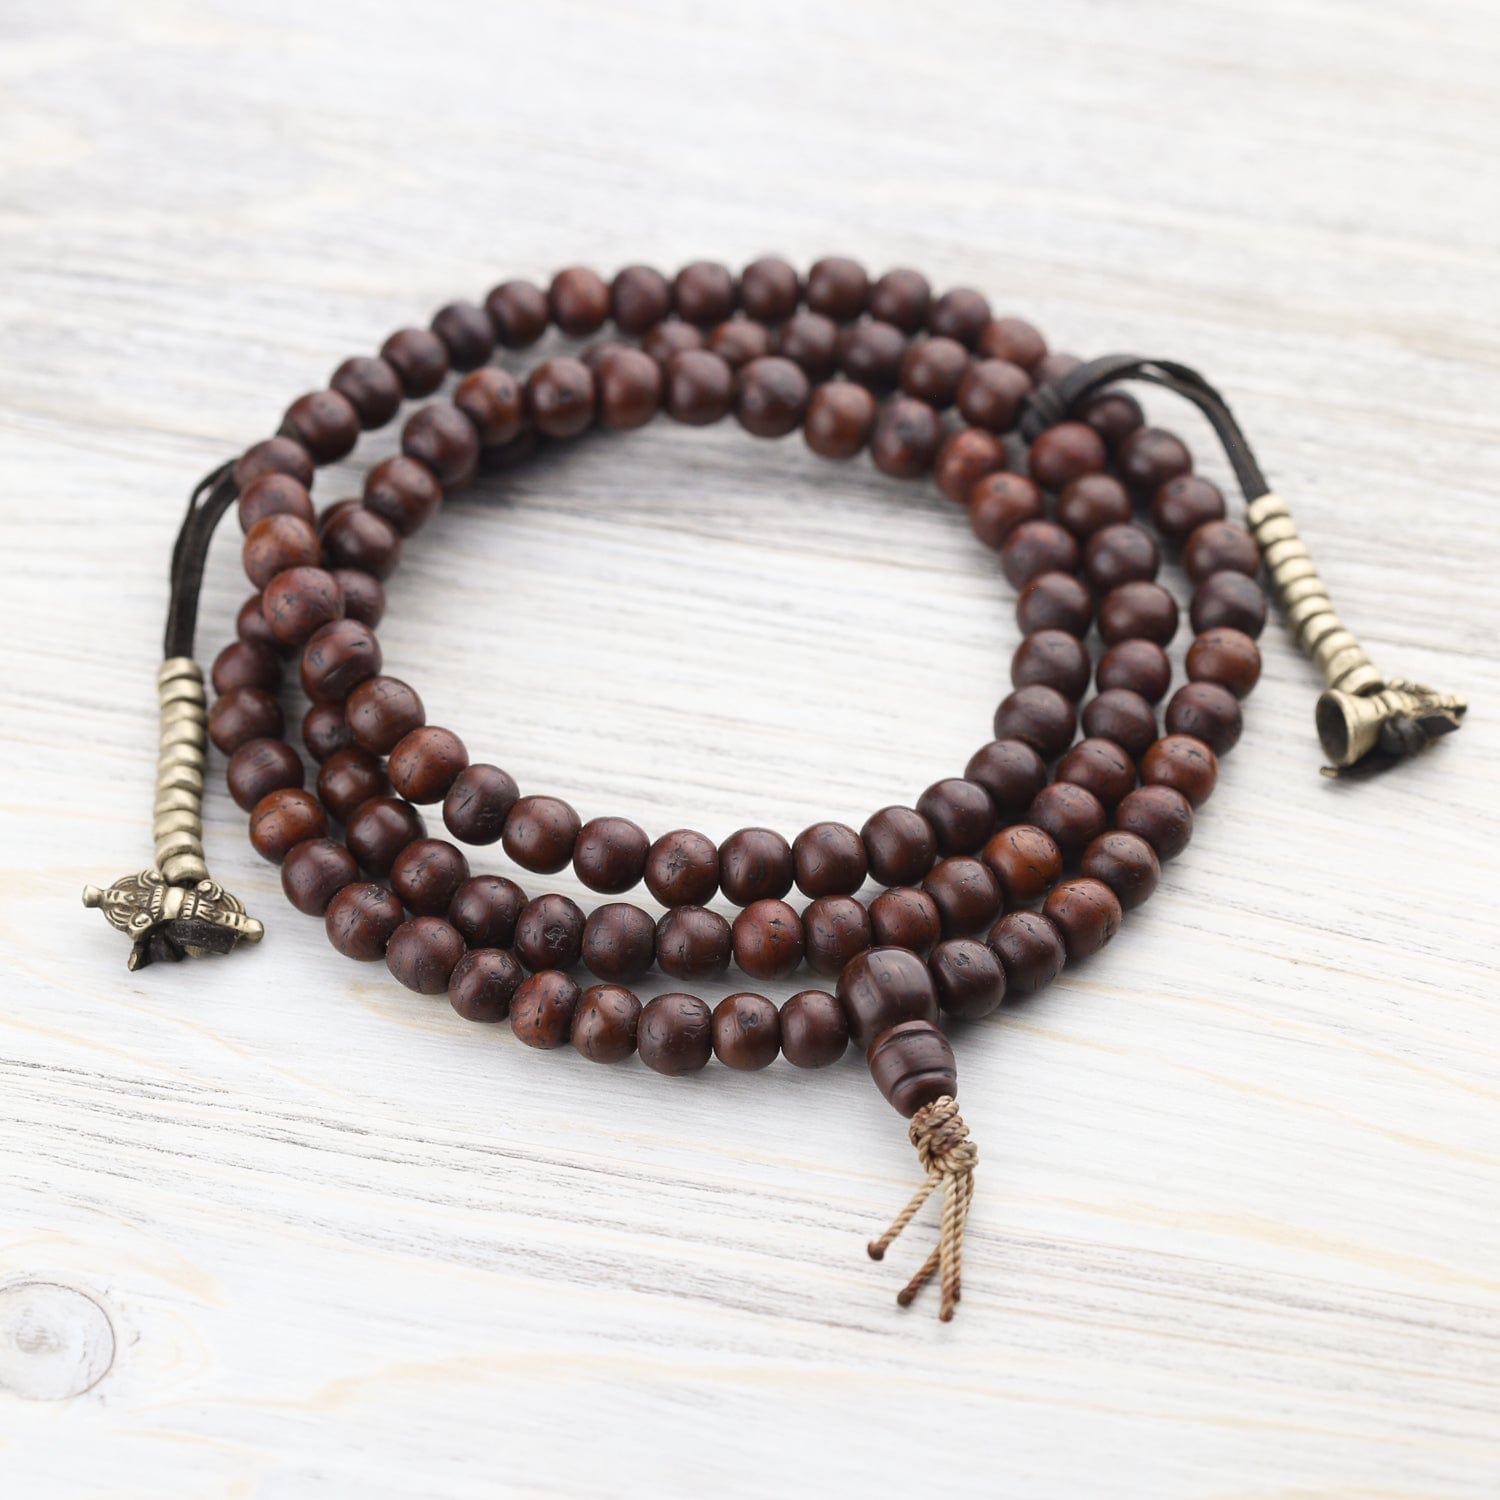 How to Use Buddhist Prayer Beads